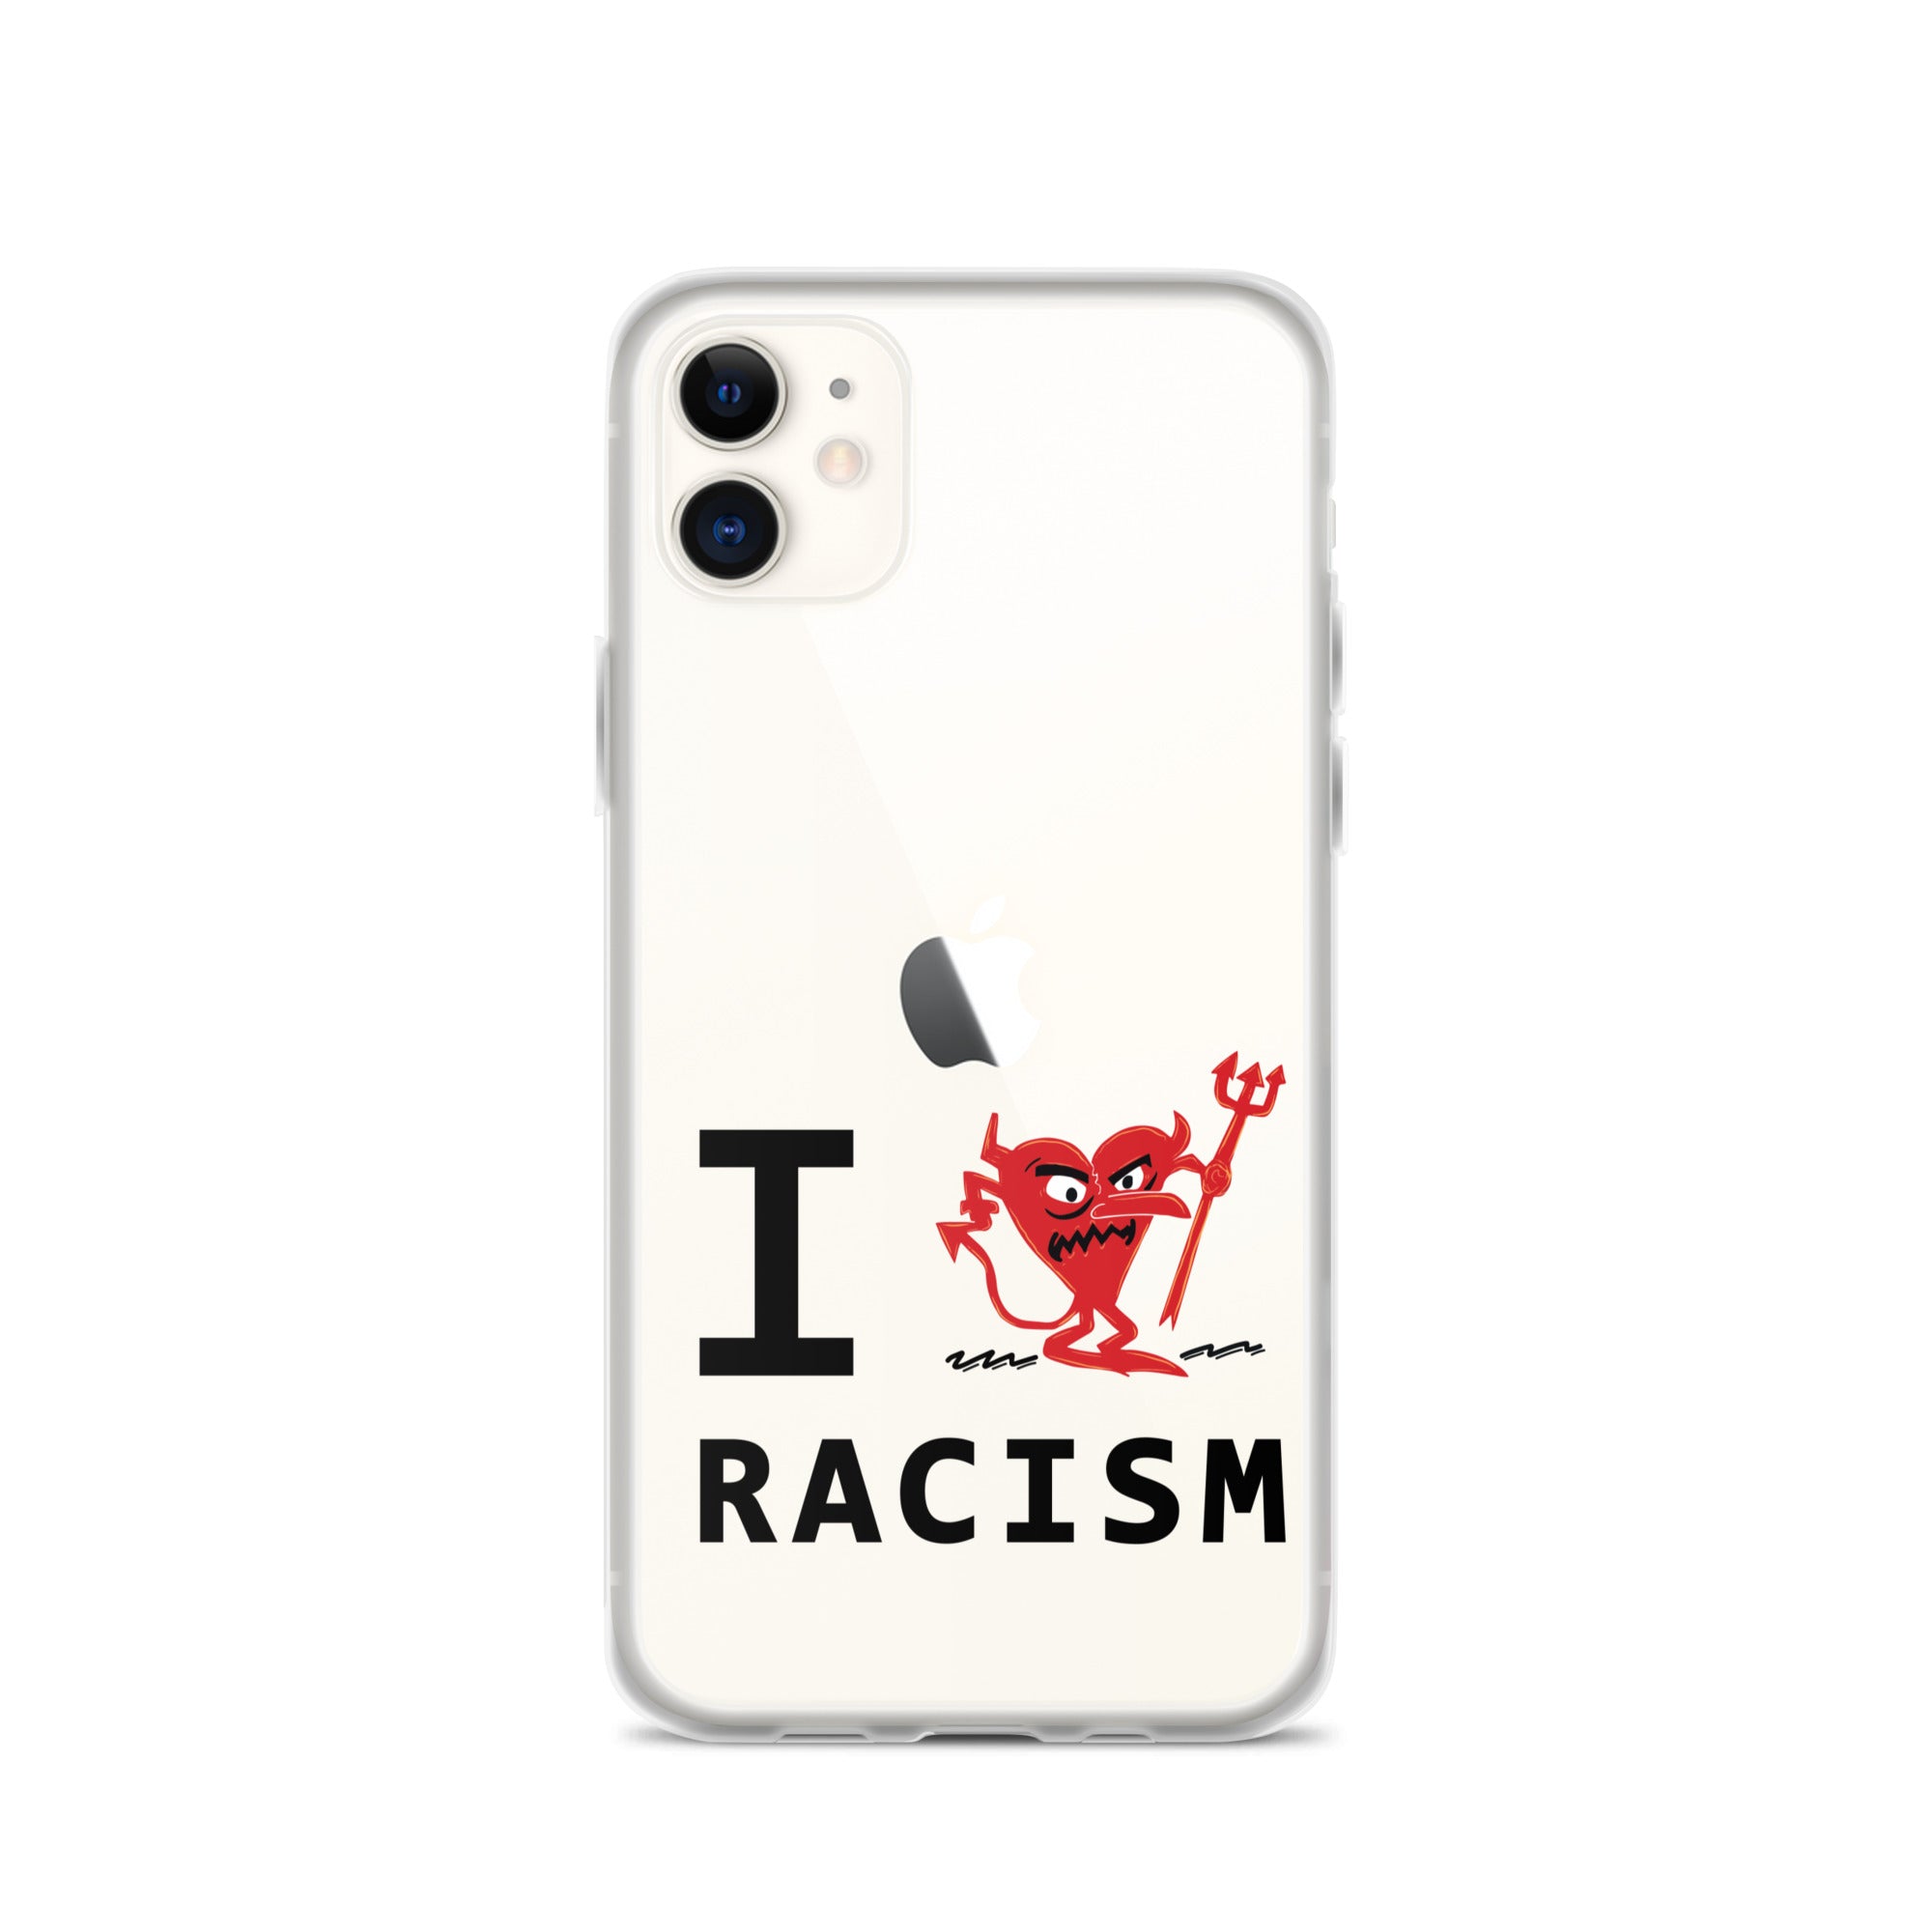 RACISM iPhone Case